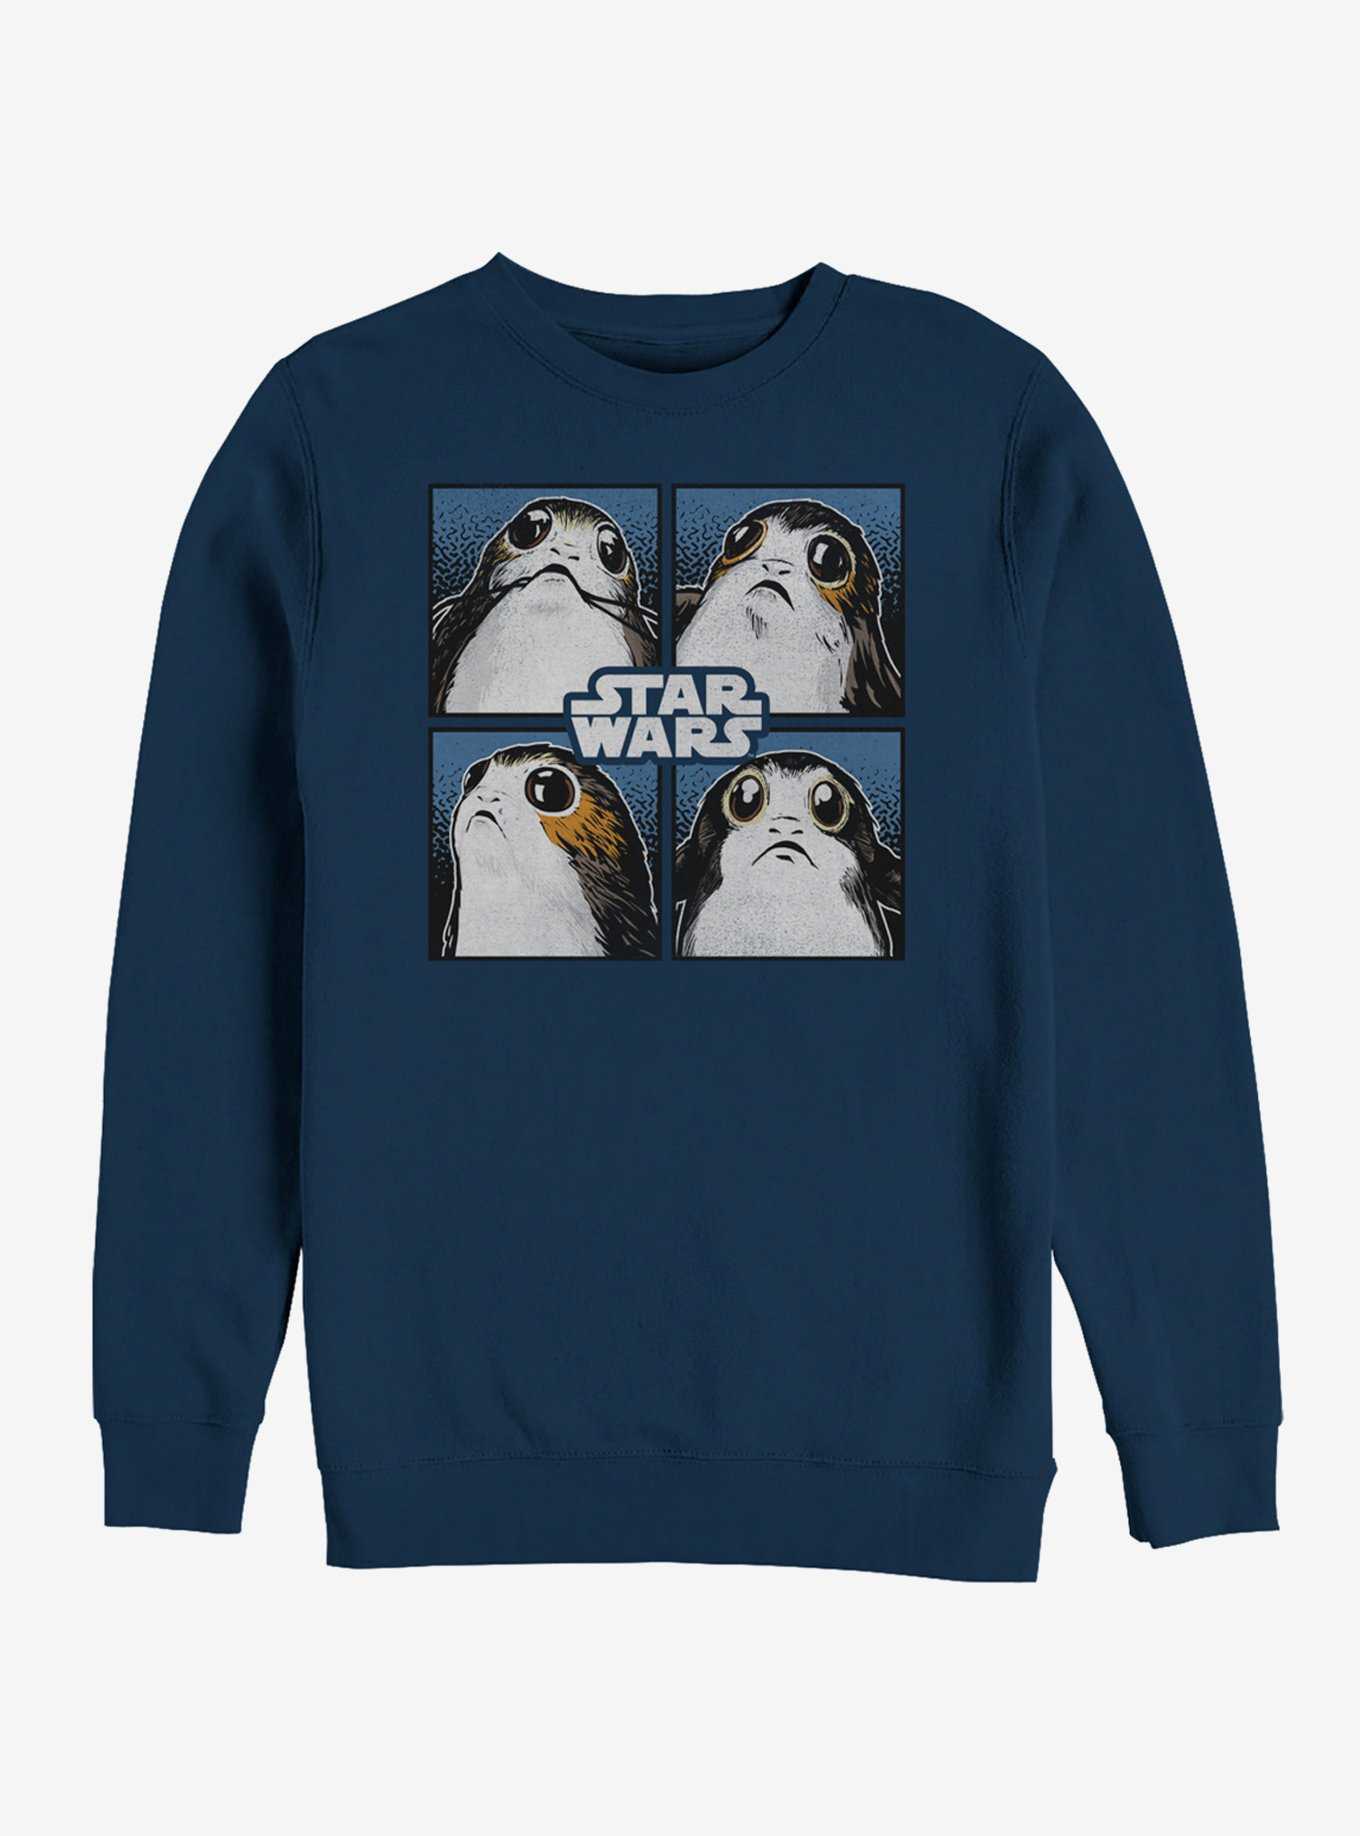 Star Wars Porg Square Sweatshirt, , hi-res